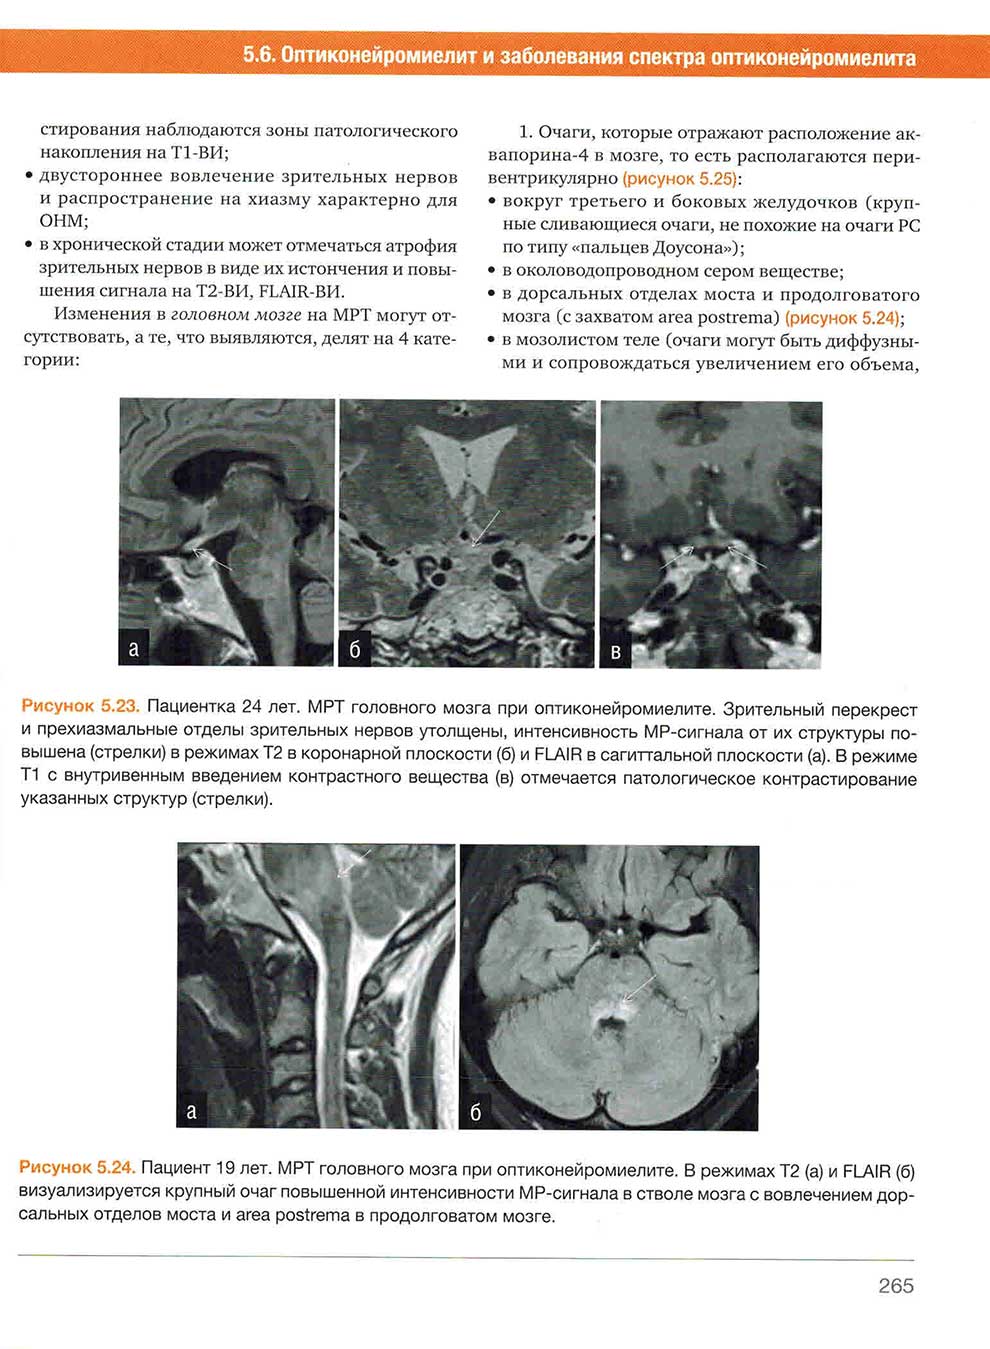 Рисунок 5.24. Пациент 19 лет. МРТ головного мозга при оптиконейромиелите.